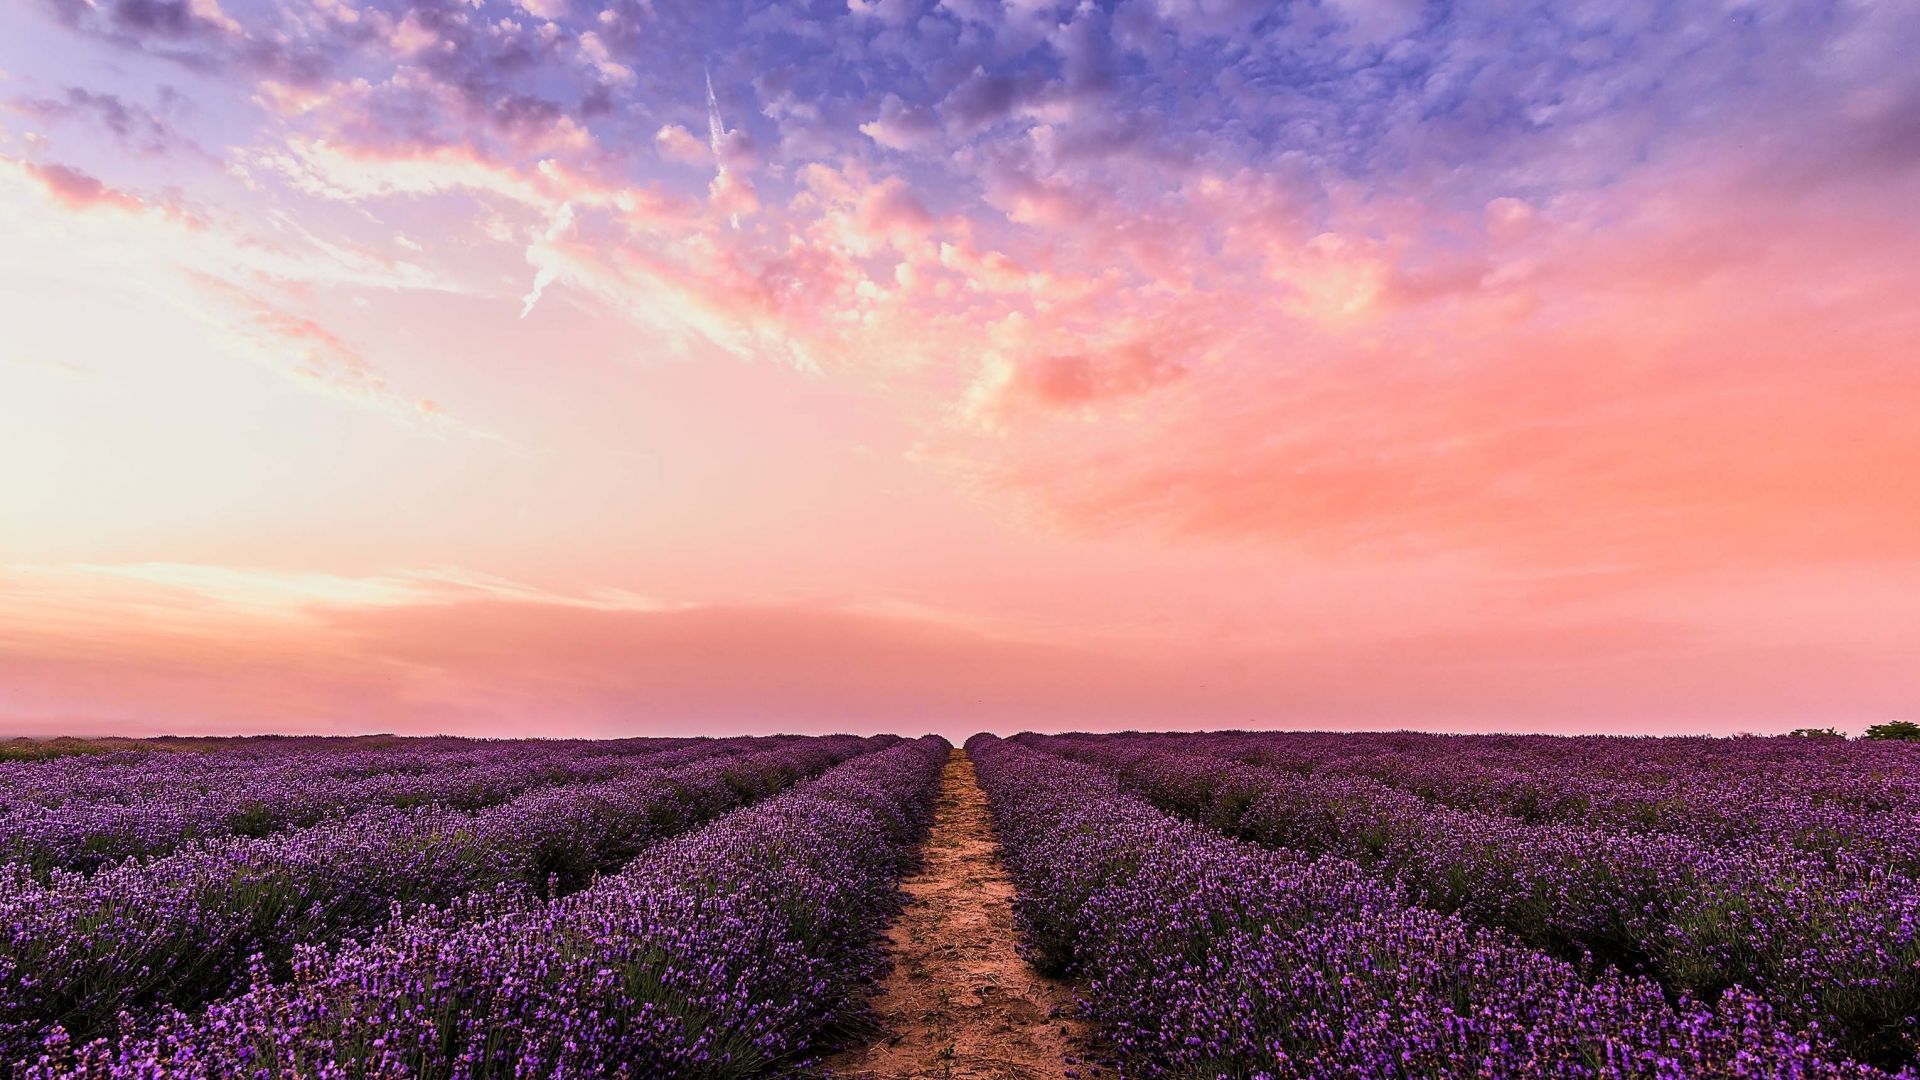 Lavender, flowers, farm, sunset wallpaper, HD image, picture, background, 23D0ed